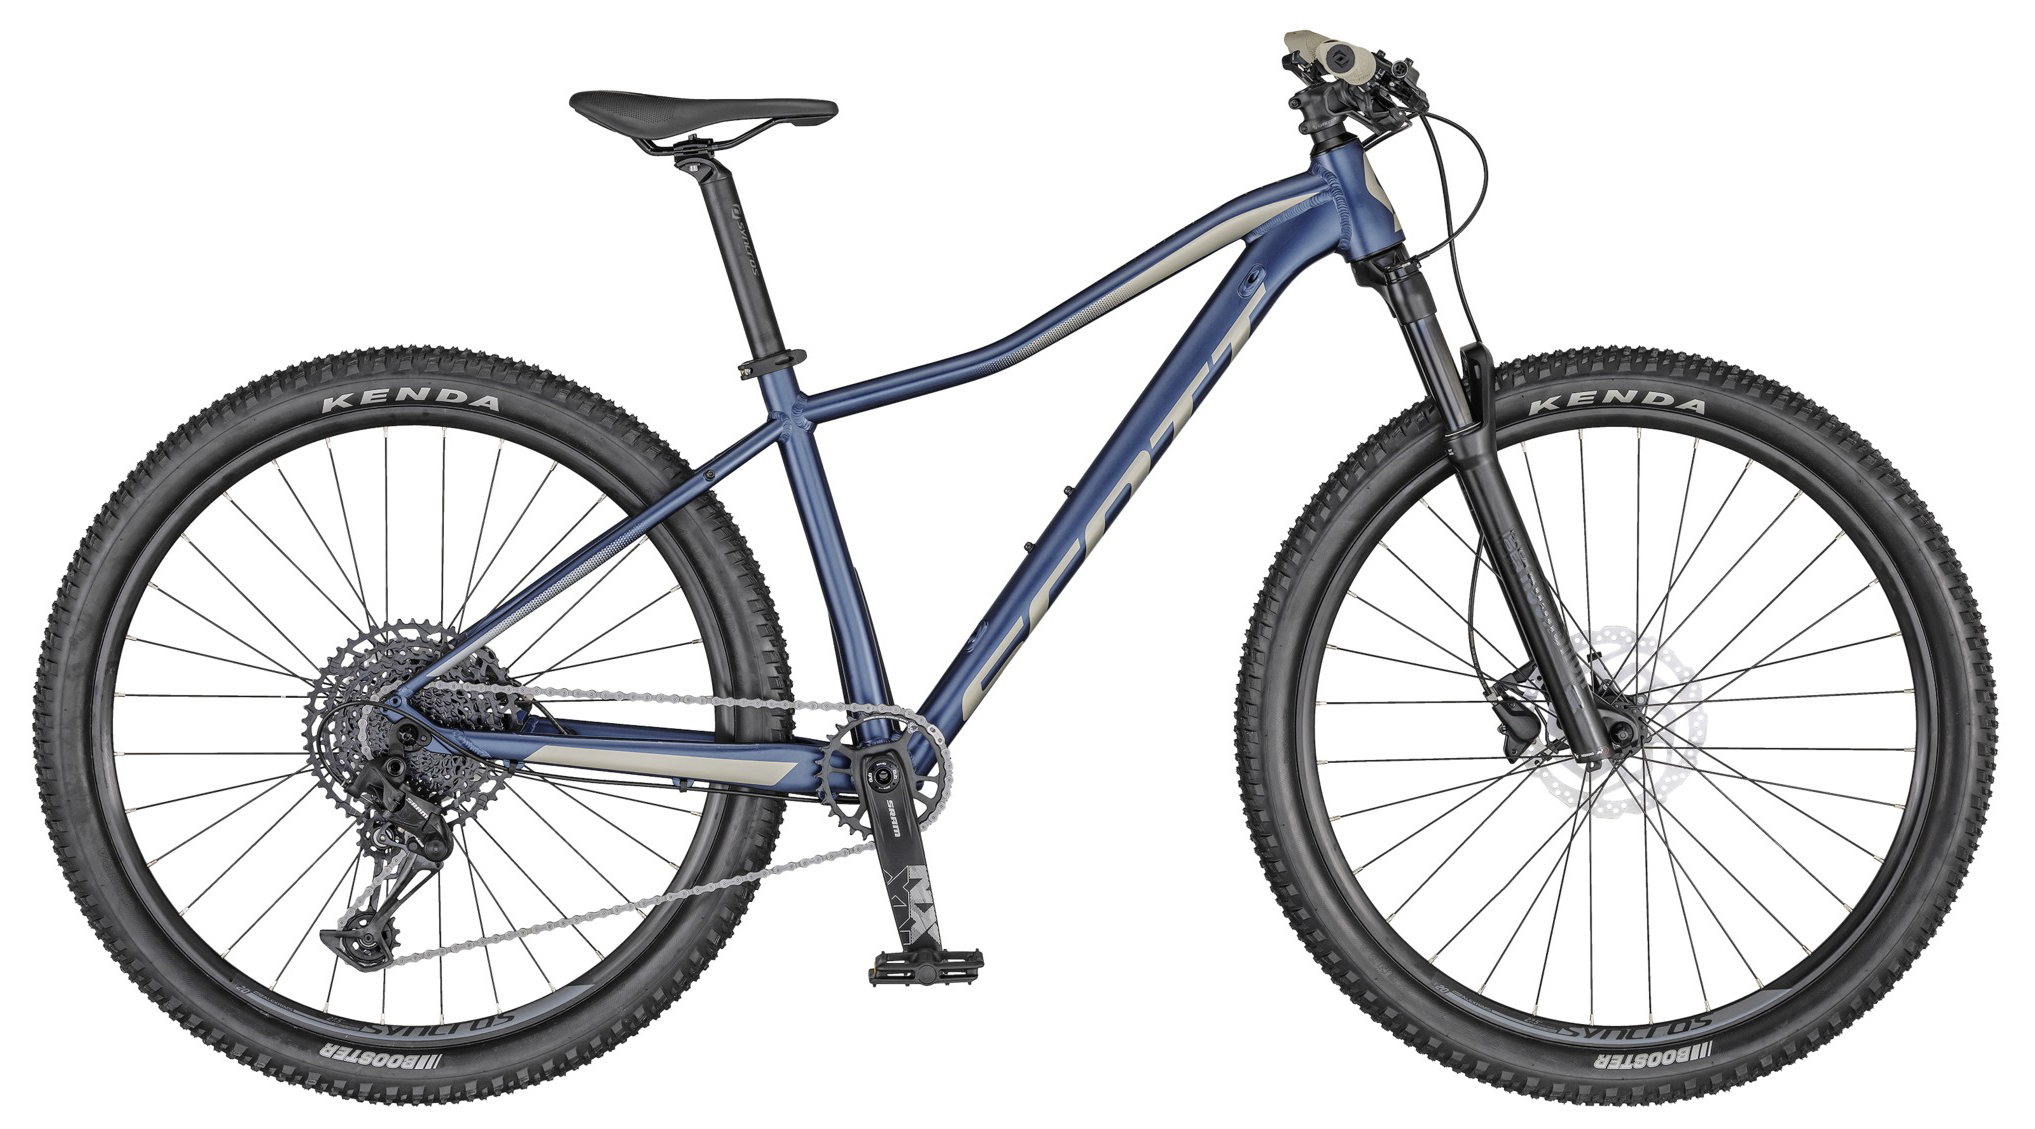  Отзывы о Горном велосипеде Scott Contessa Active 10 27.5 2020